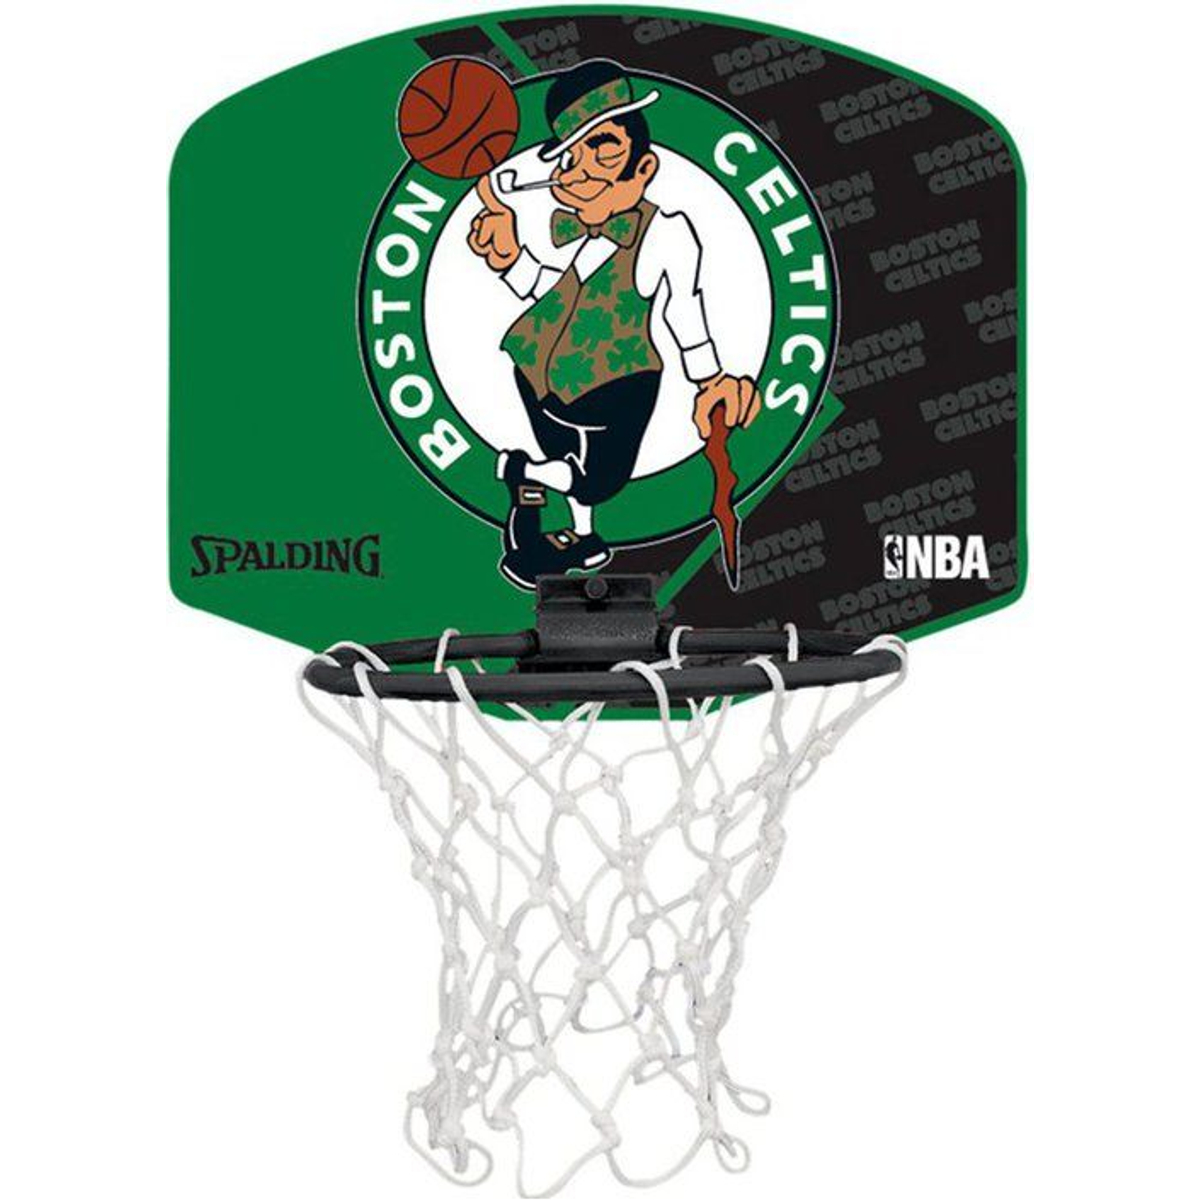 Spalding Boston Celtics Mini-Basket